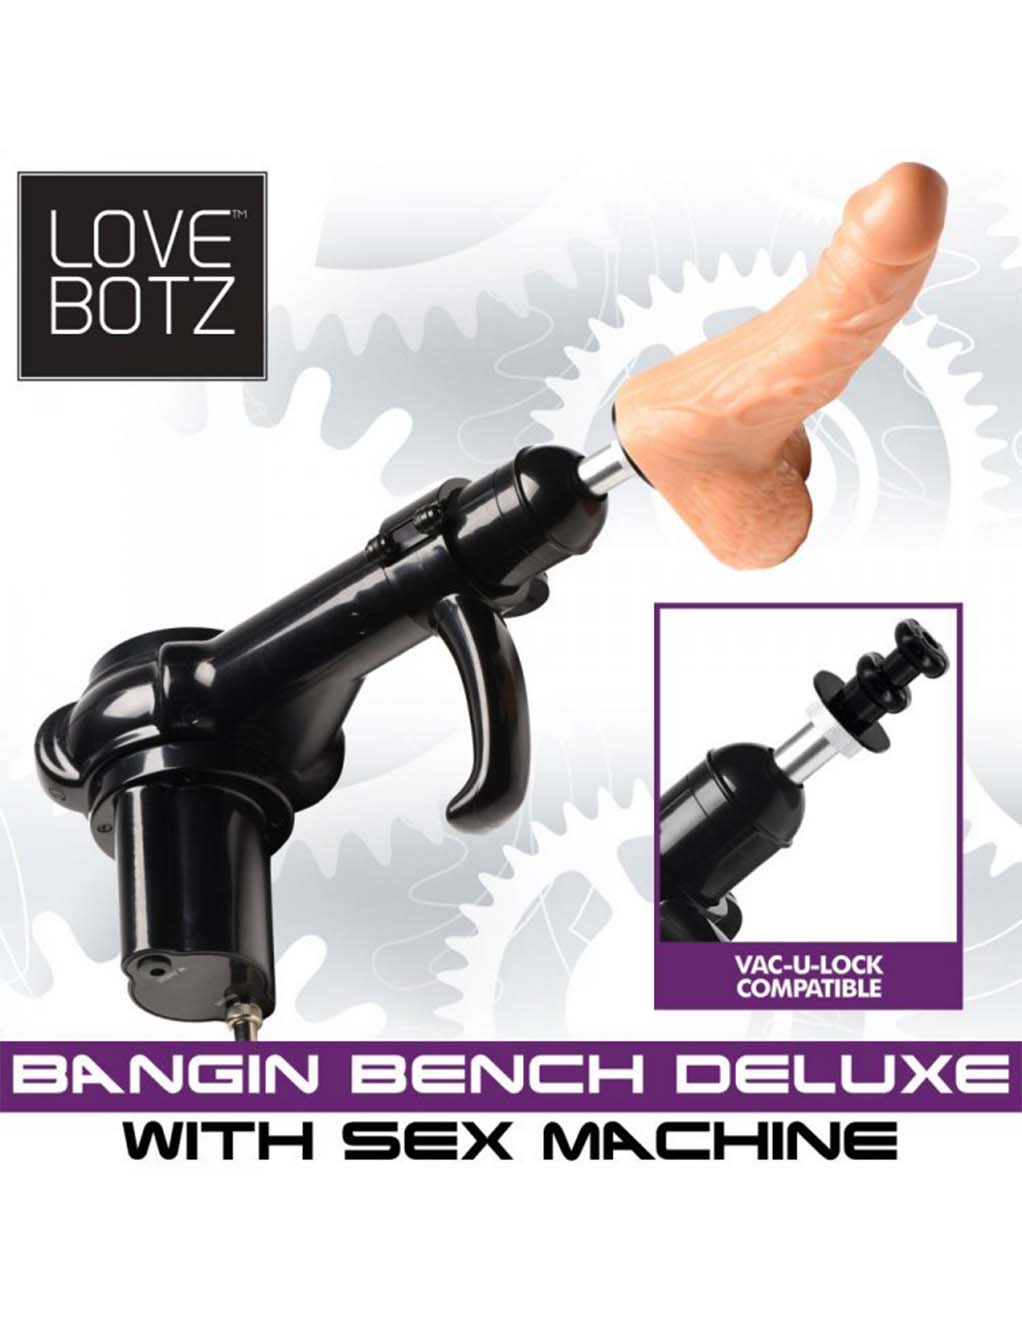 LoveBotz Deluxe Bangin' Bench- Detail 2